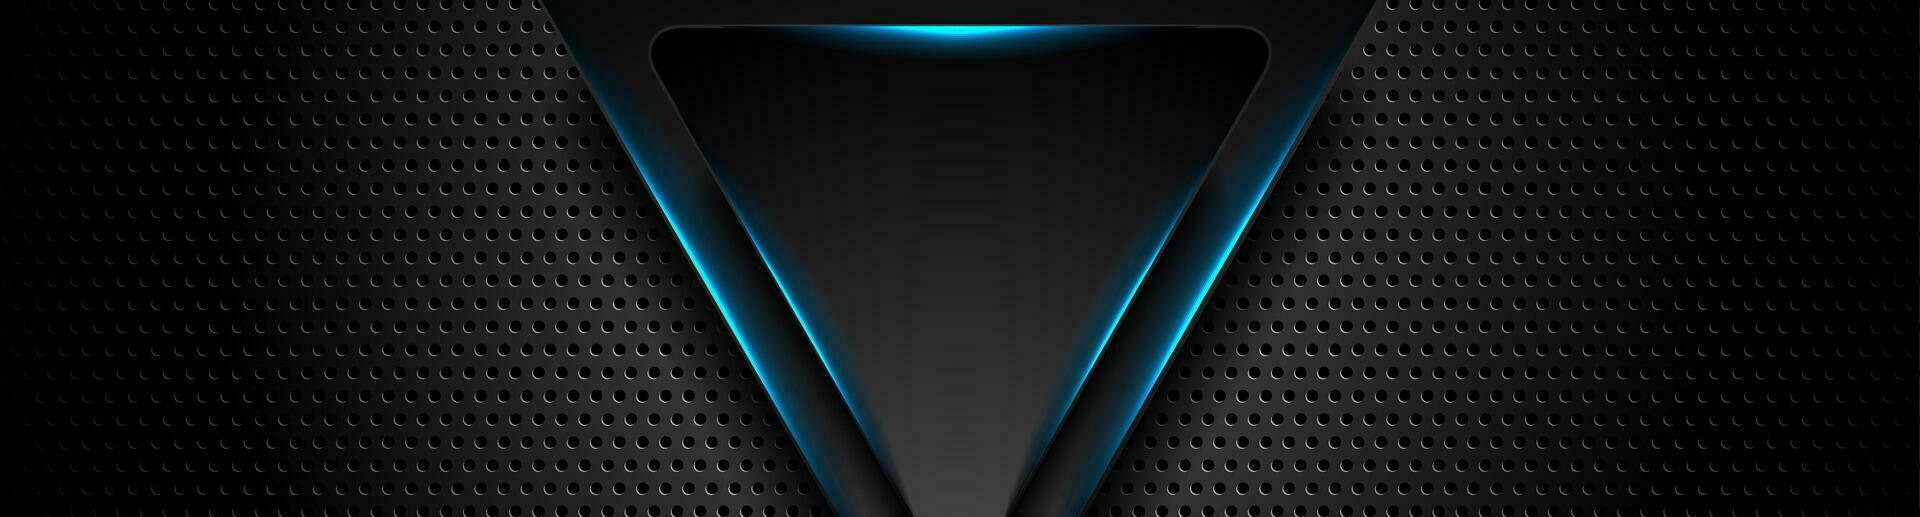 trogen teknologi bakgrund med blå neon trianglar vektor